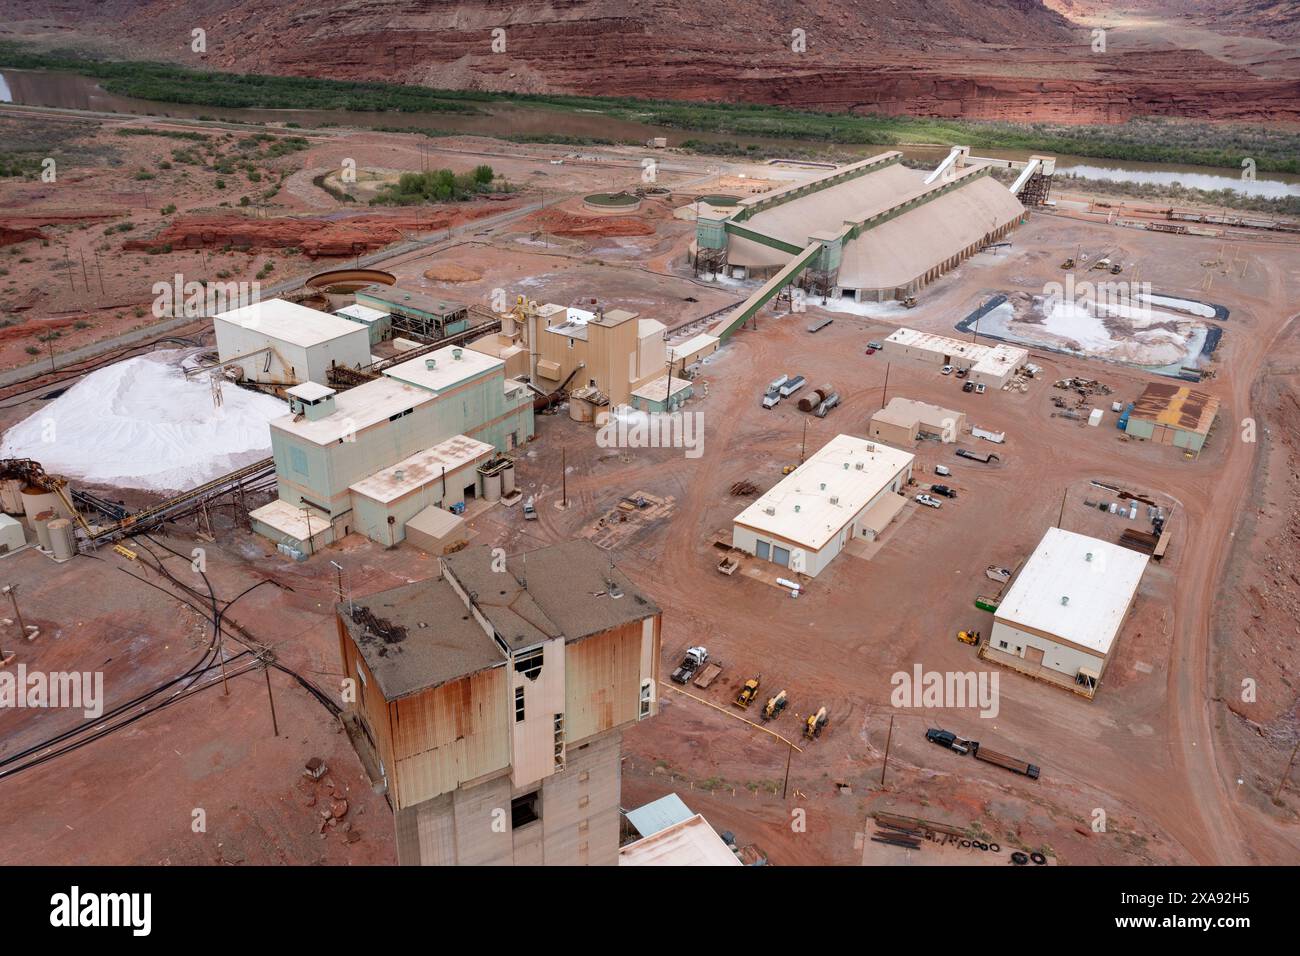 The Intrepid Potash Mine processing facility near Moab, Utah. Stock Photo